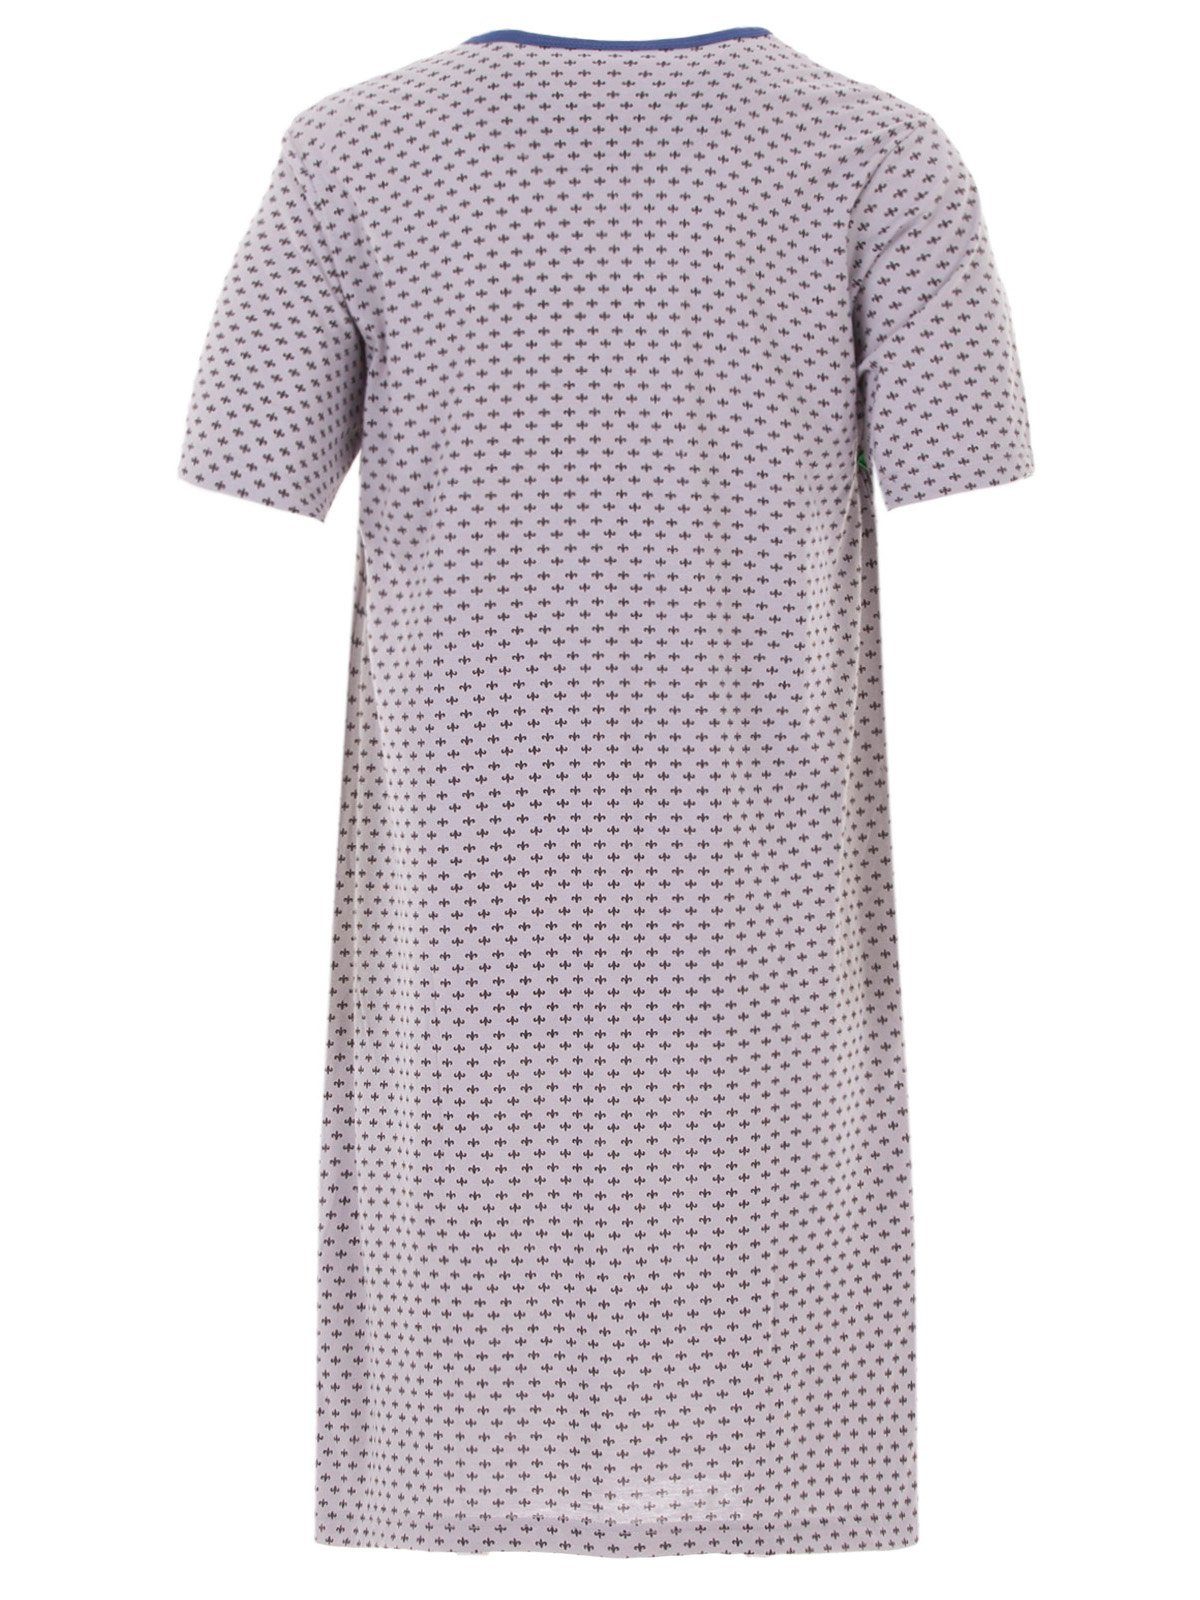 Henry - Terre Nachthemd grau Nachthemd Lilie Kurzarm